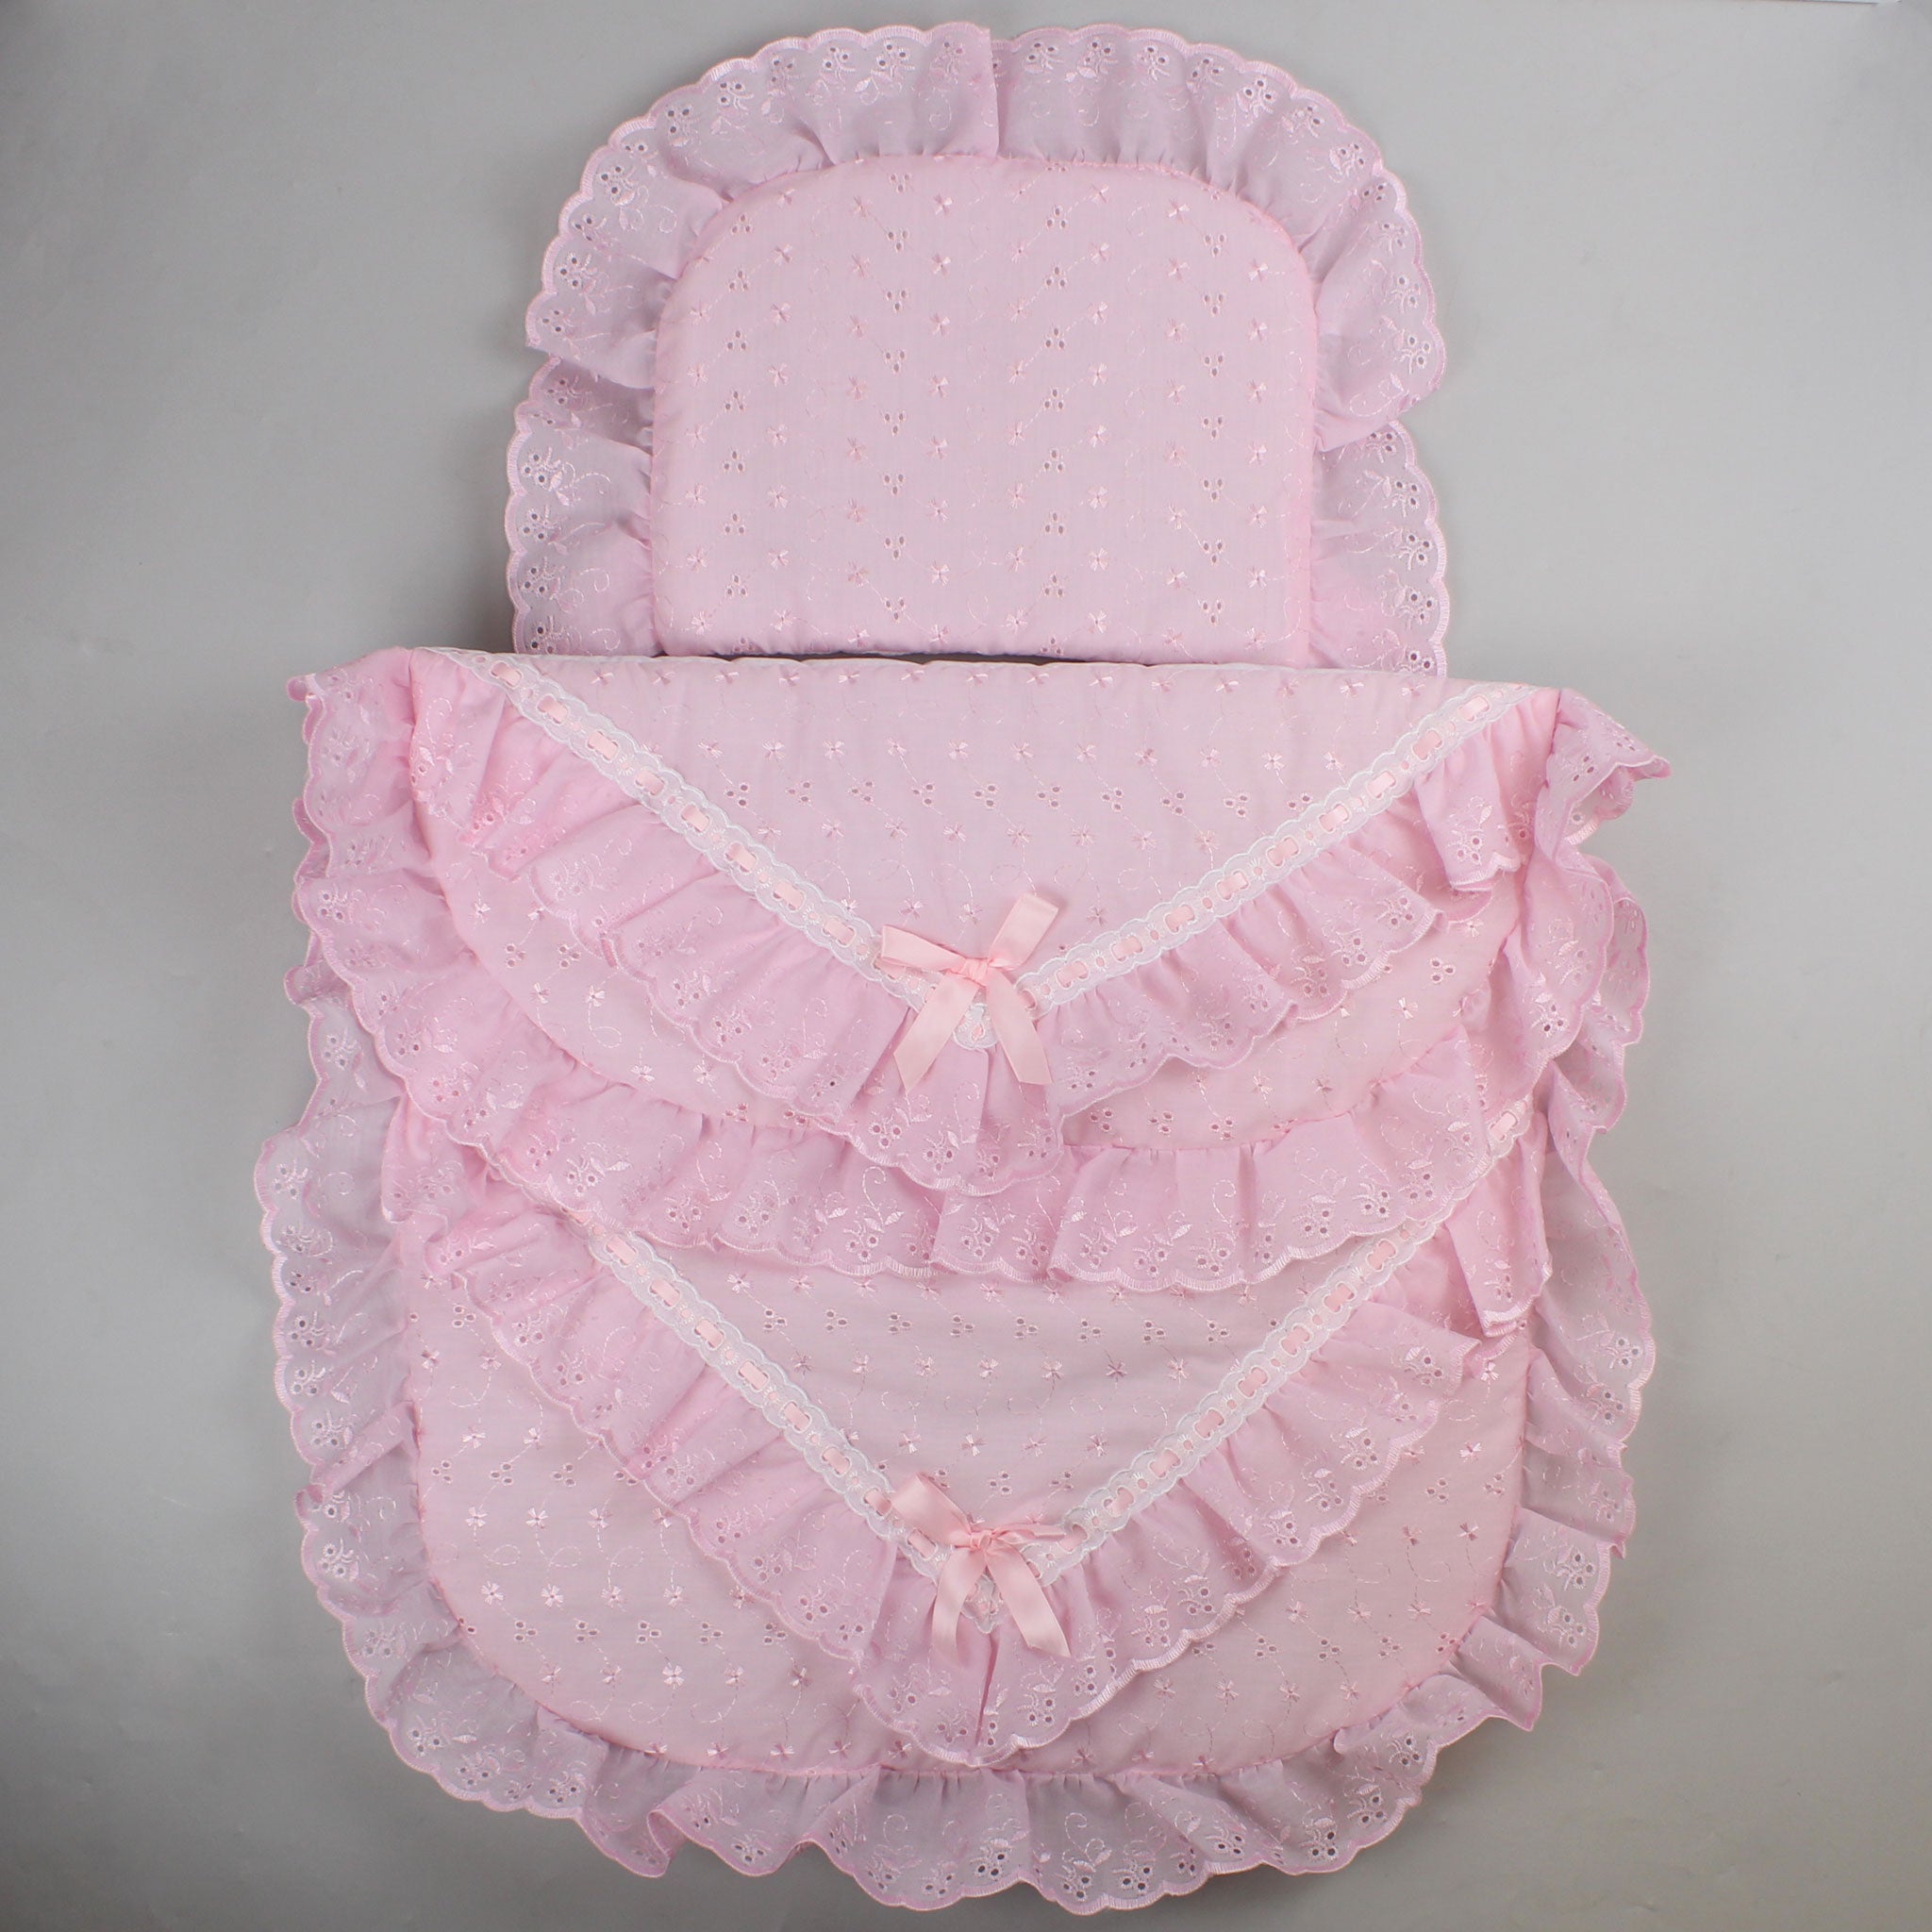 Broderie Anglaise Pram Set - Pram Quilt and Pillow Pink